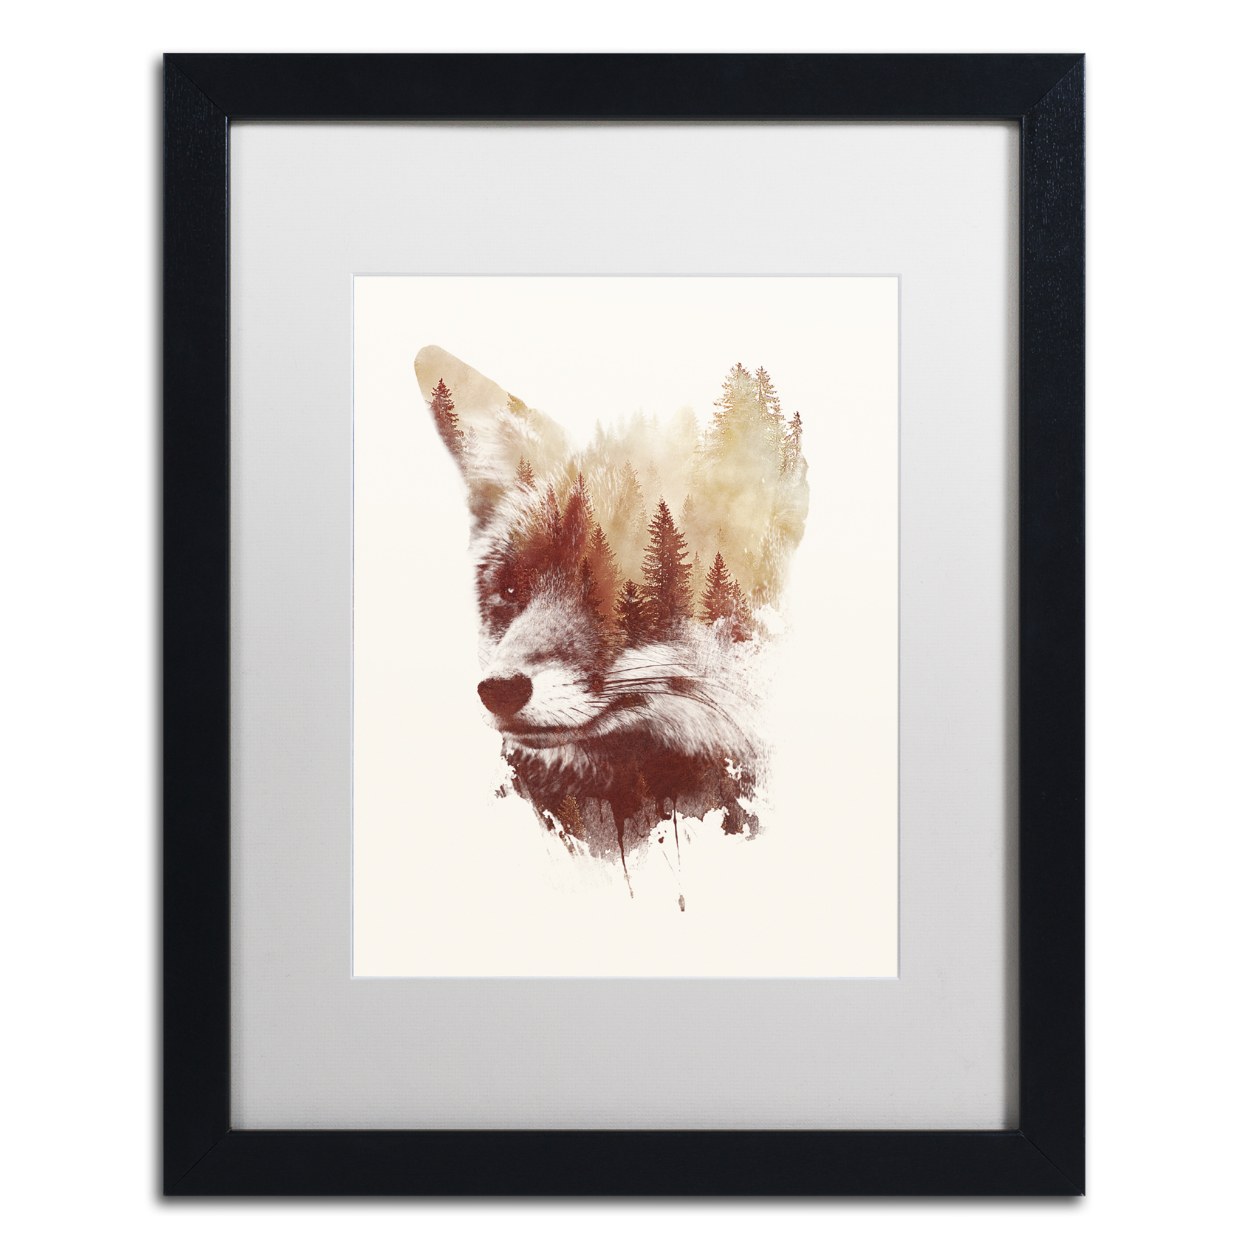 Robert Farkas 'Blind Fox' Black Wooden Framed Art 18 X 22 Inches